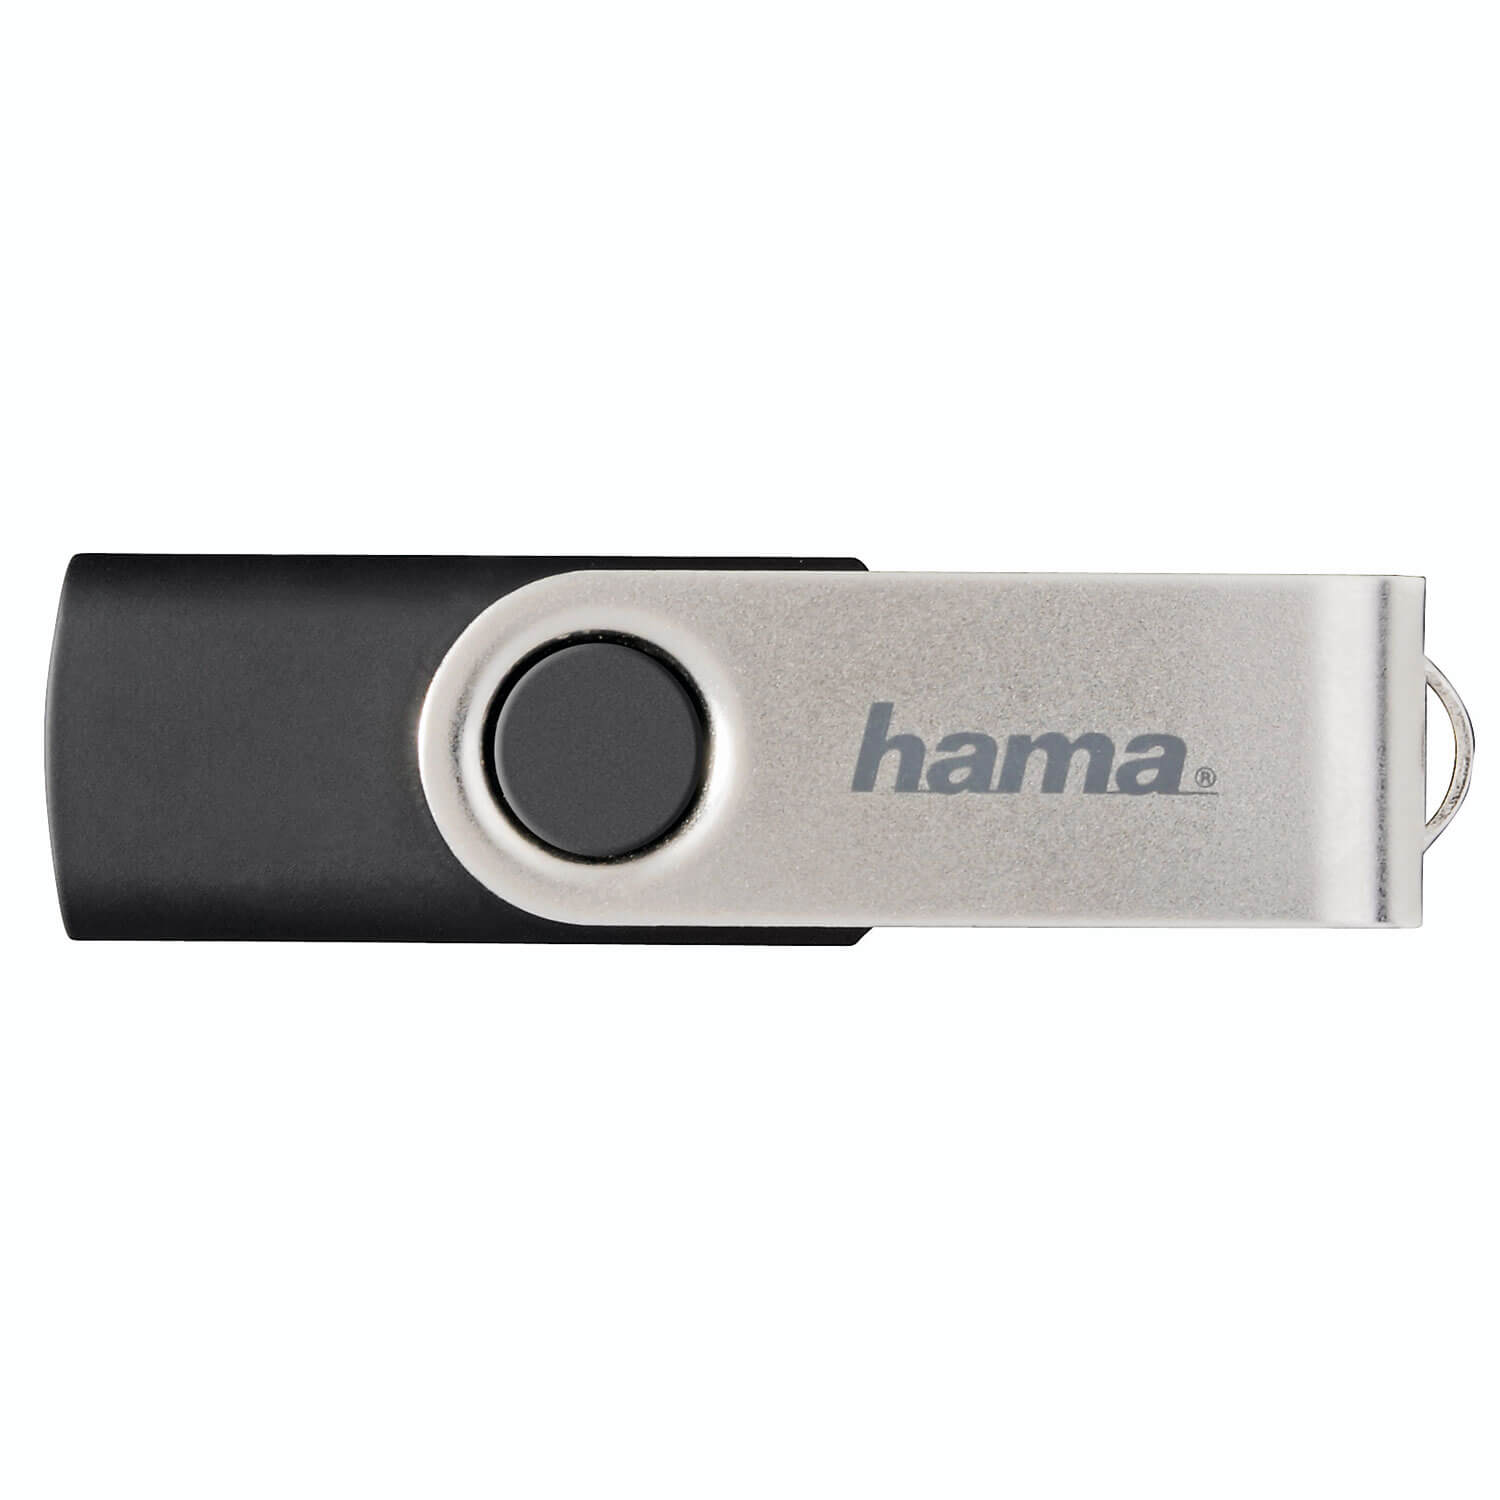  Memorie USB Hama Rotate 94175, 16GB, USB 2.0, Negru 